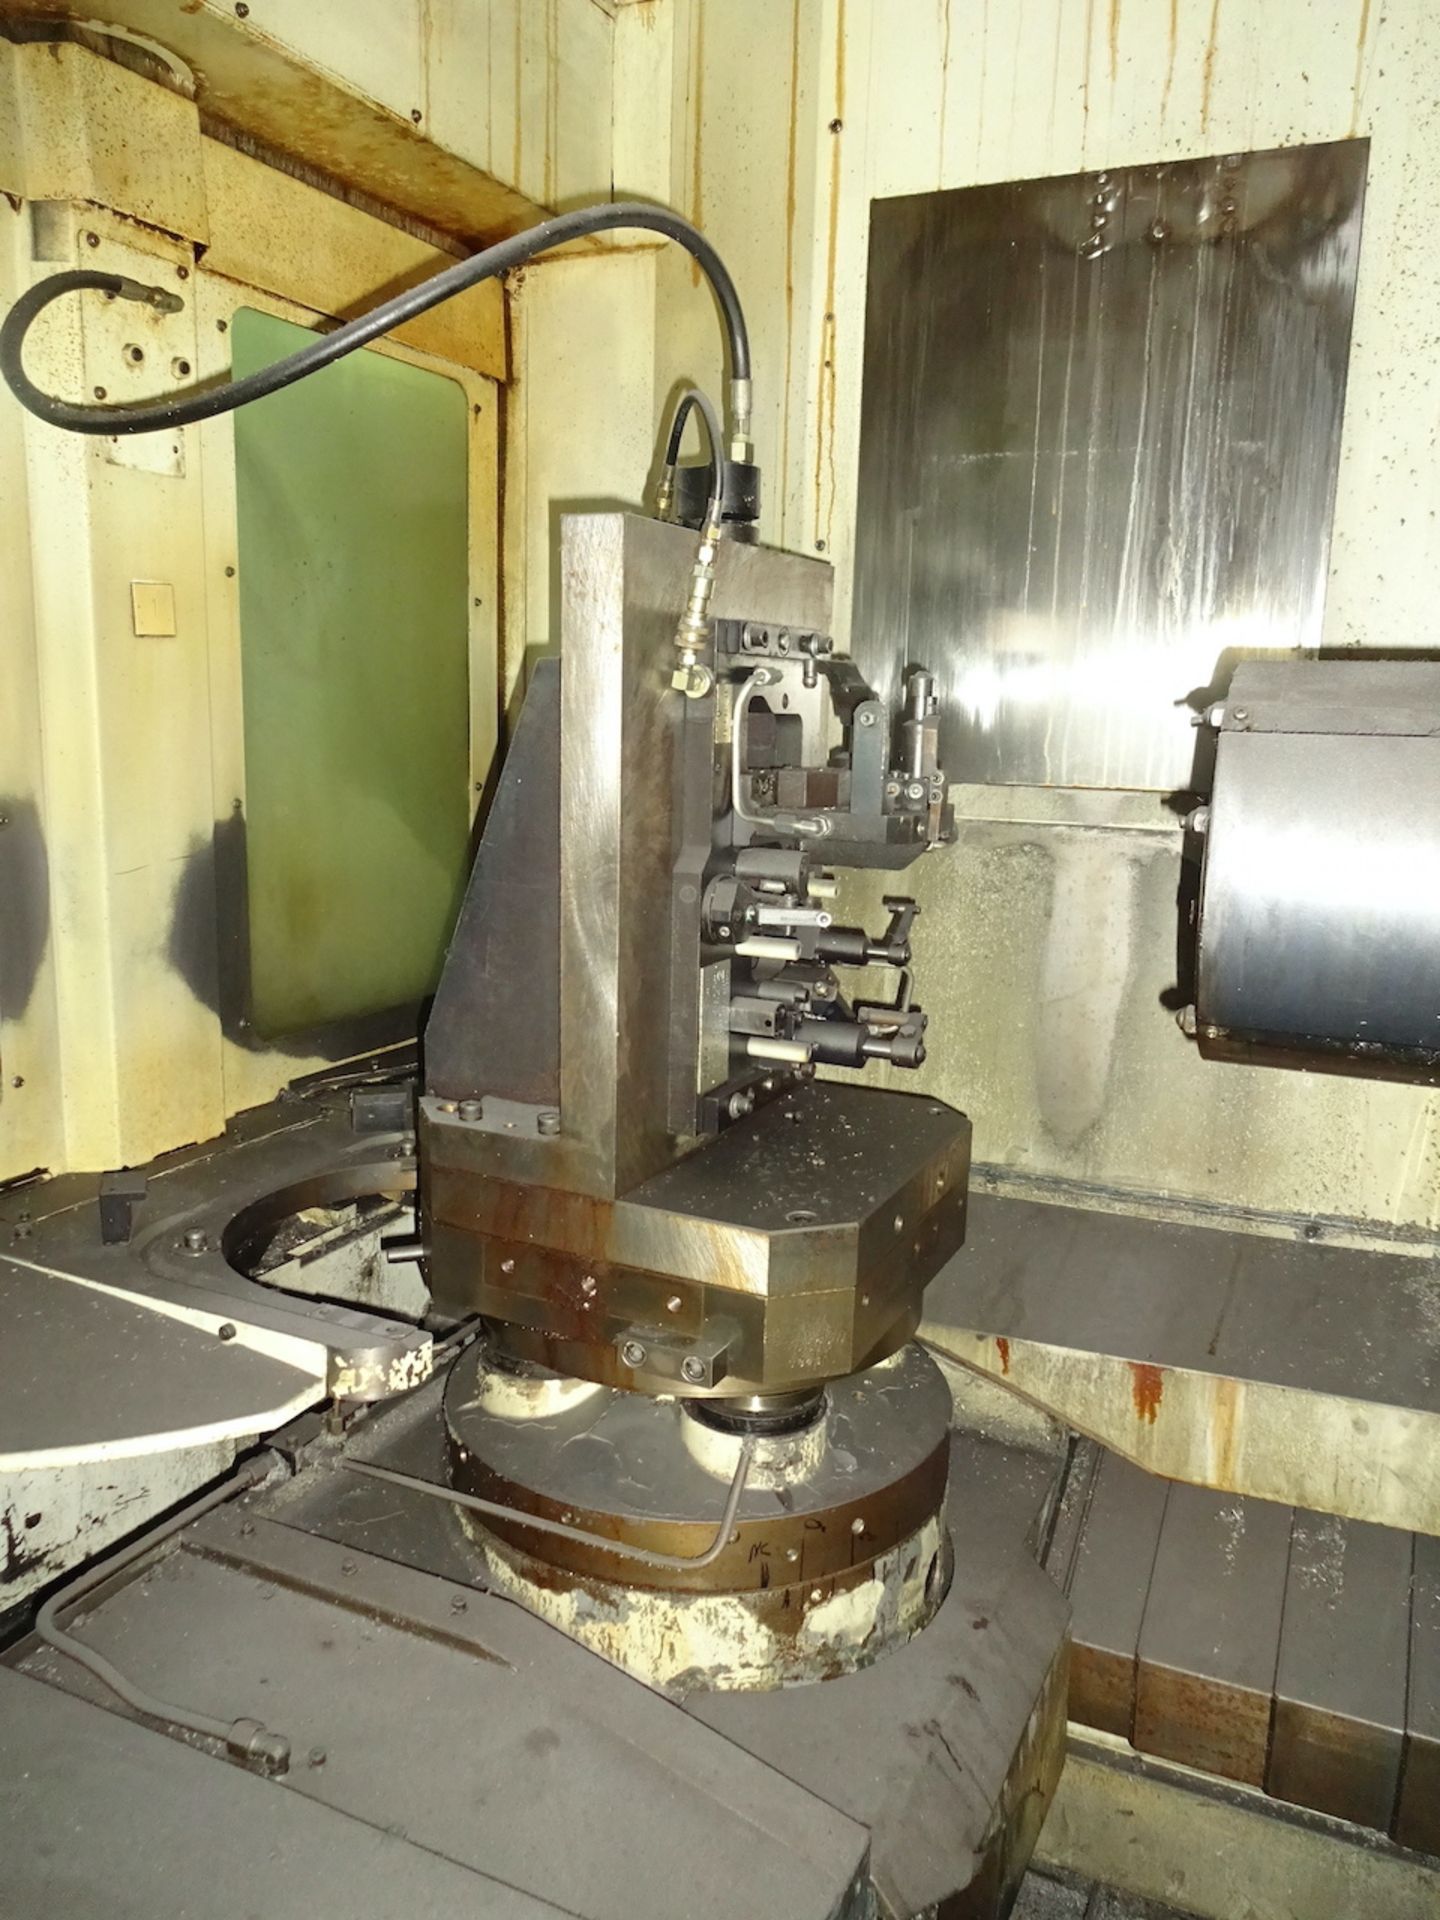 KITAMURA MODEL MYCENTER HX400 CNC HORIZONTAL MACHINING CENTER, S/N 42477, 13,000 RPM MAX SPINDLE - Image 20 of 31